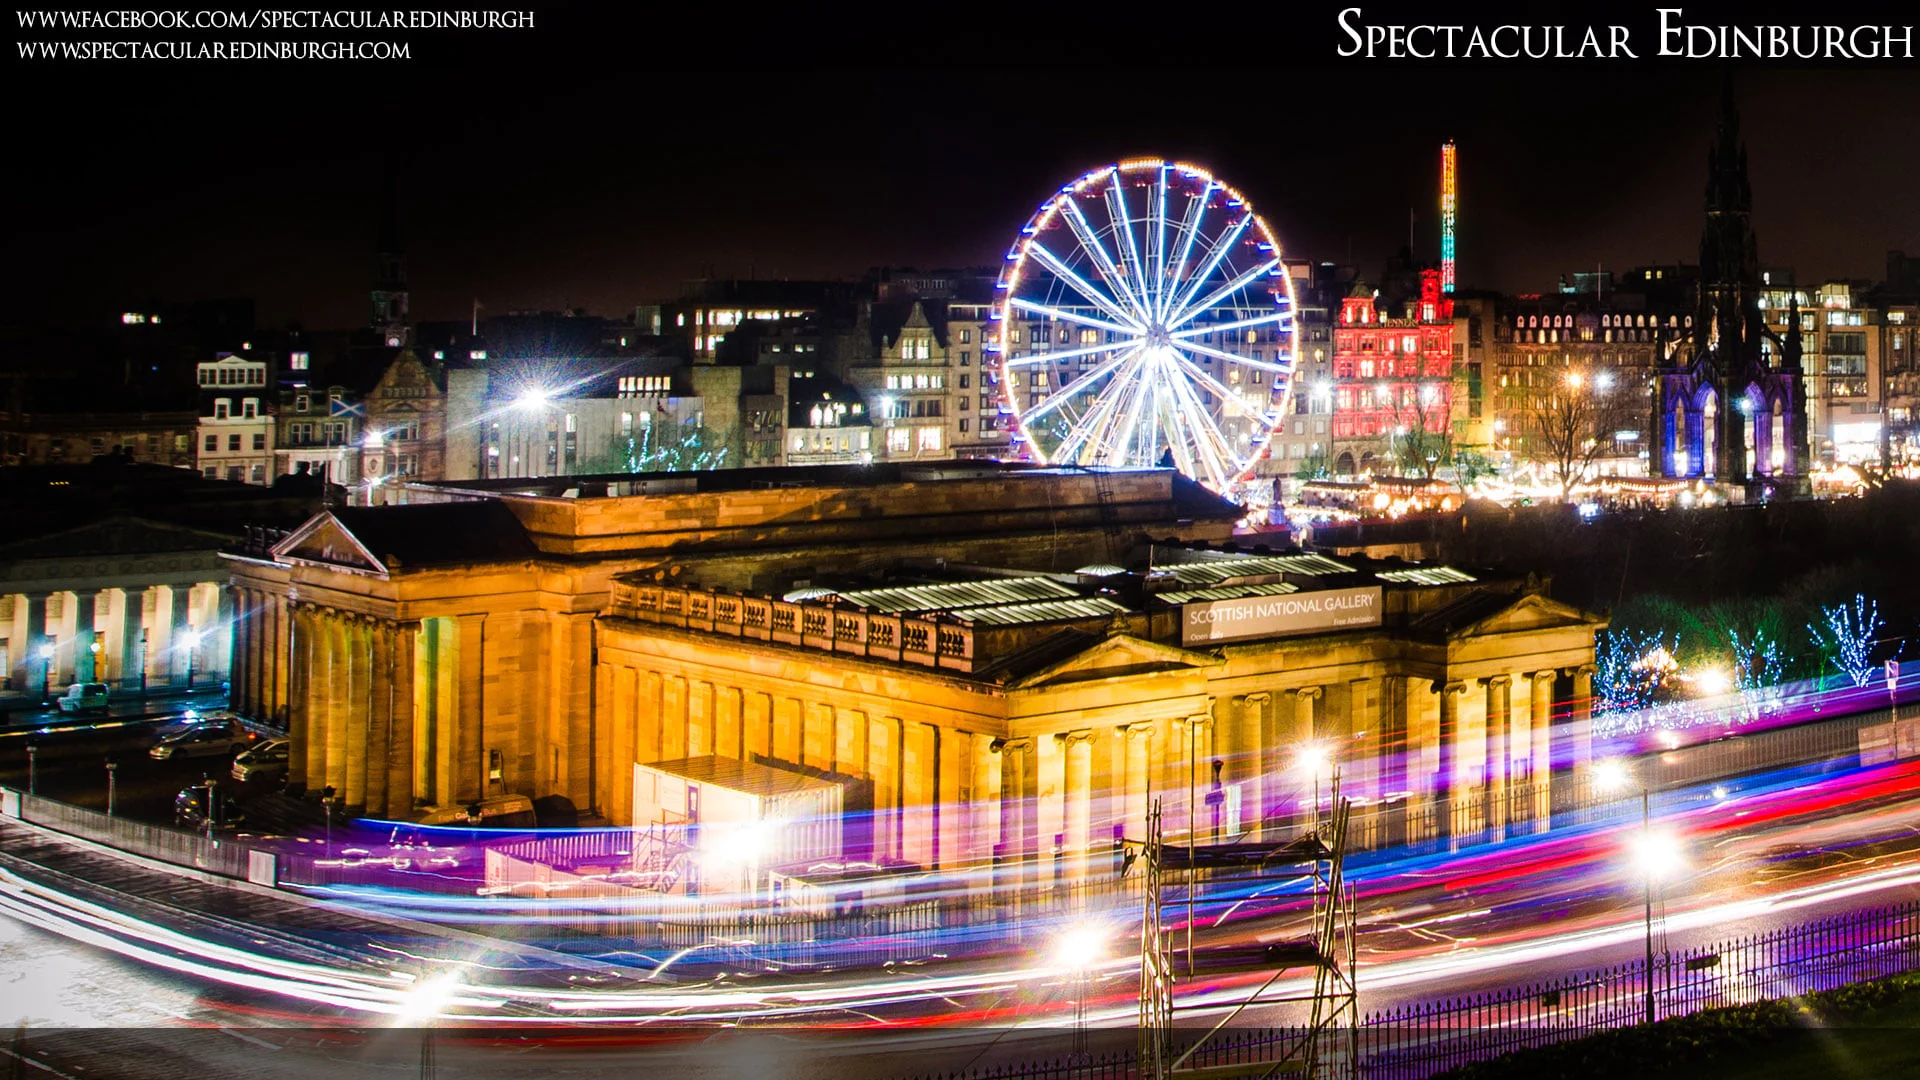 Wallpaper 8 - Light Trails at Edinburgh's Christmas - Spectacular Edinburgh Photography